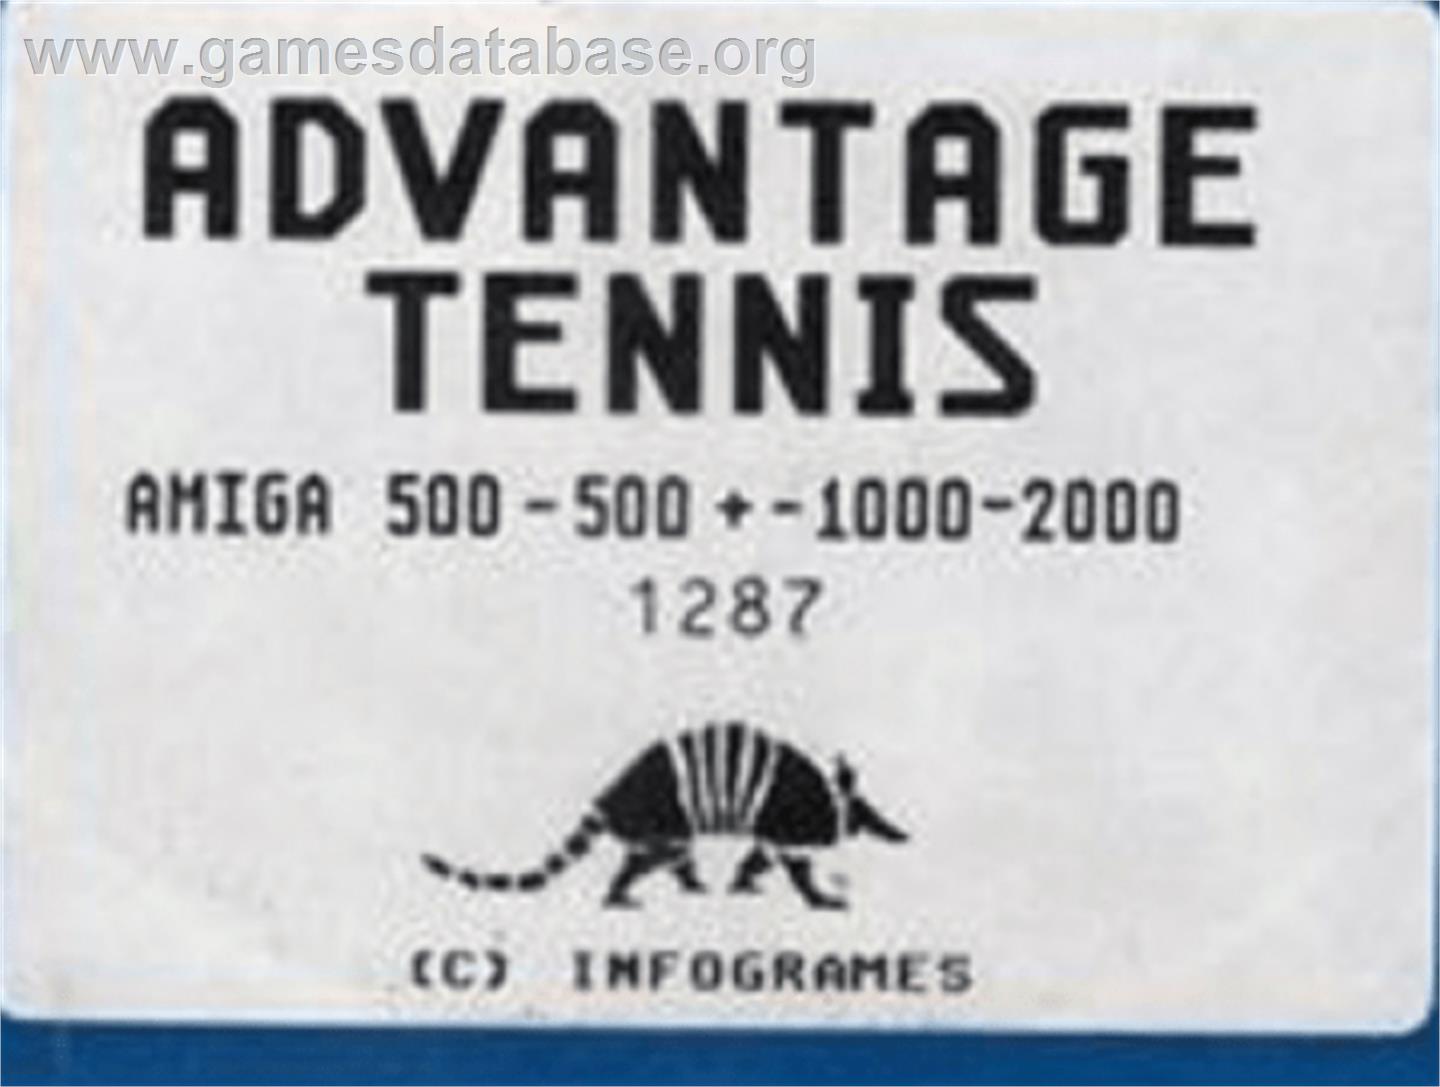 Advantage Tennis - Commodore Amiga - Artwork - Cartridge Top